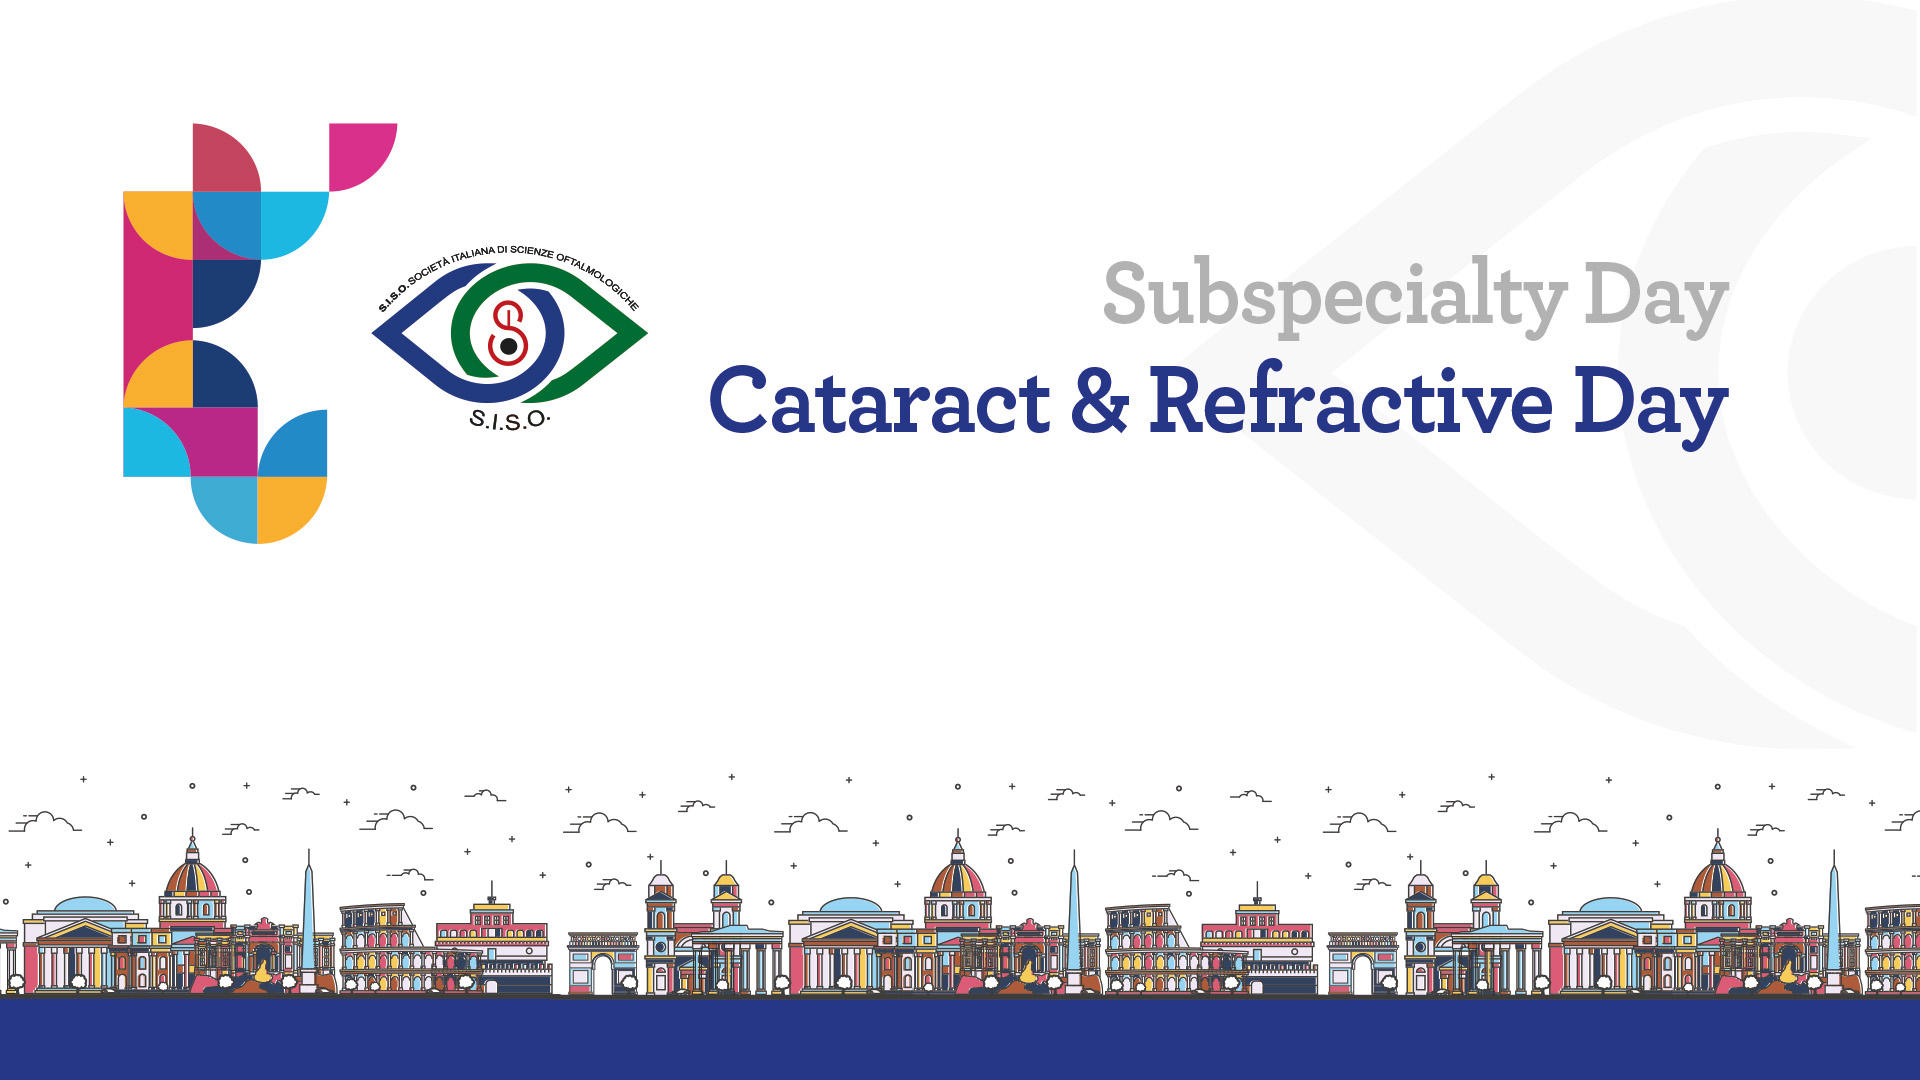 Cataract & Refractive Day